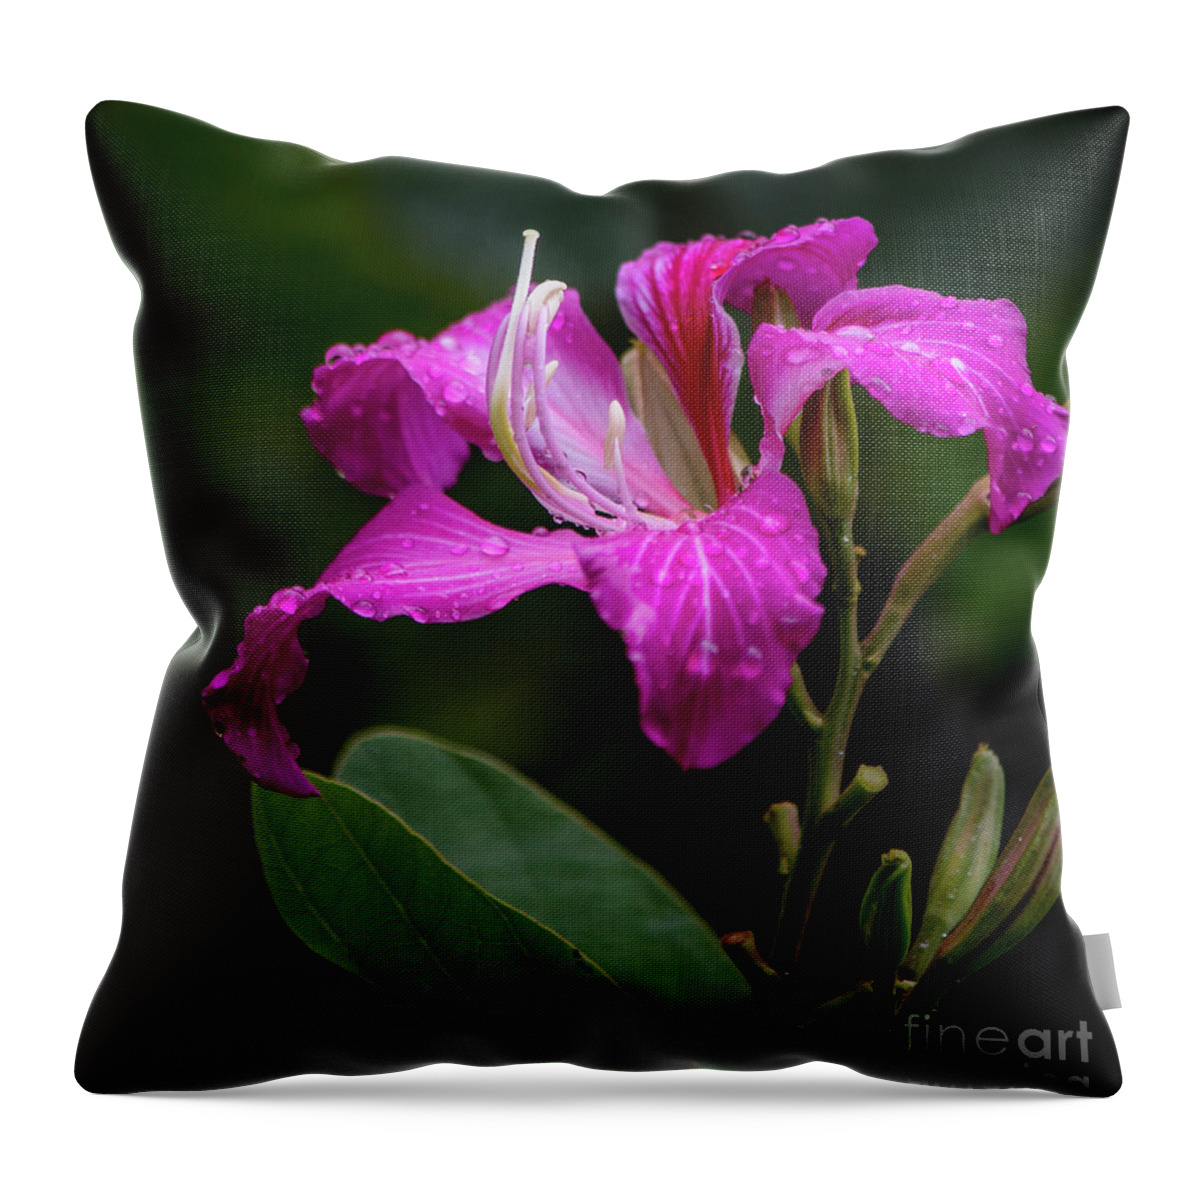 Hawaii Throw Pillow featuring the photograph Hong Kong Orchid by Teresa Wilson